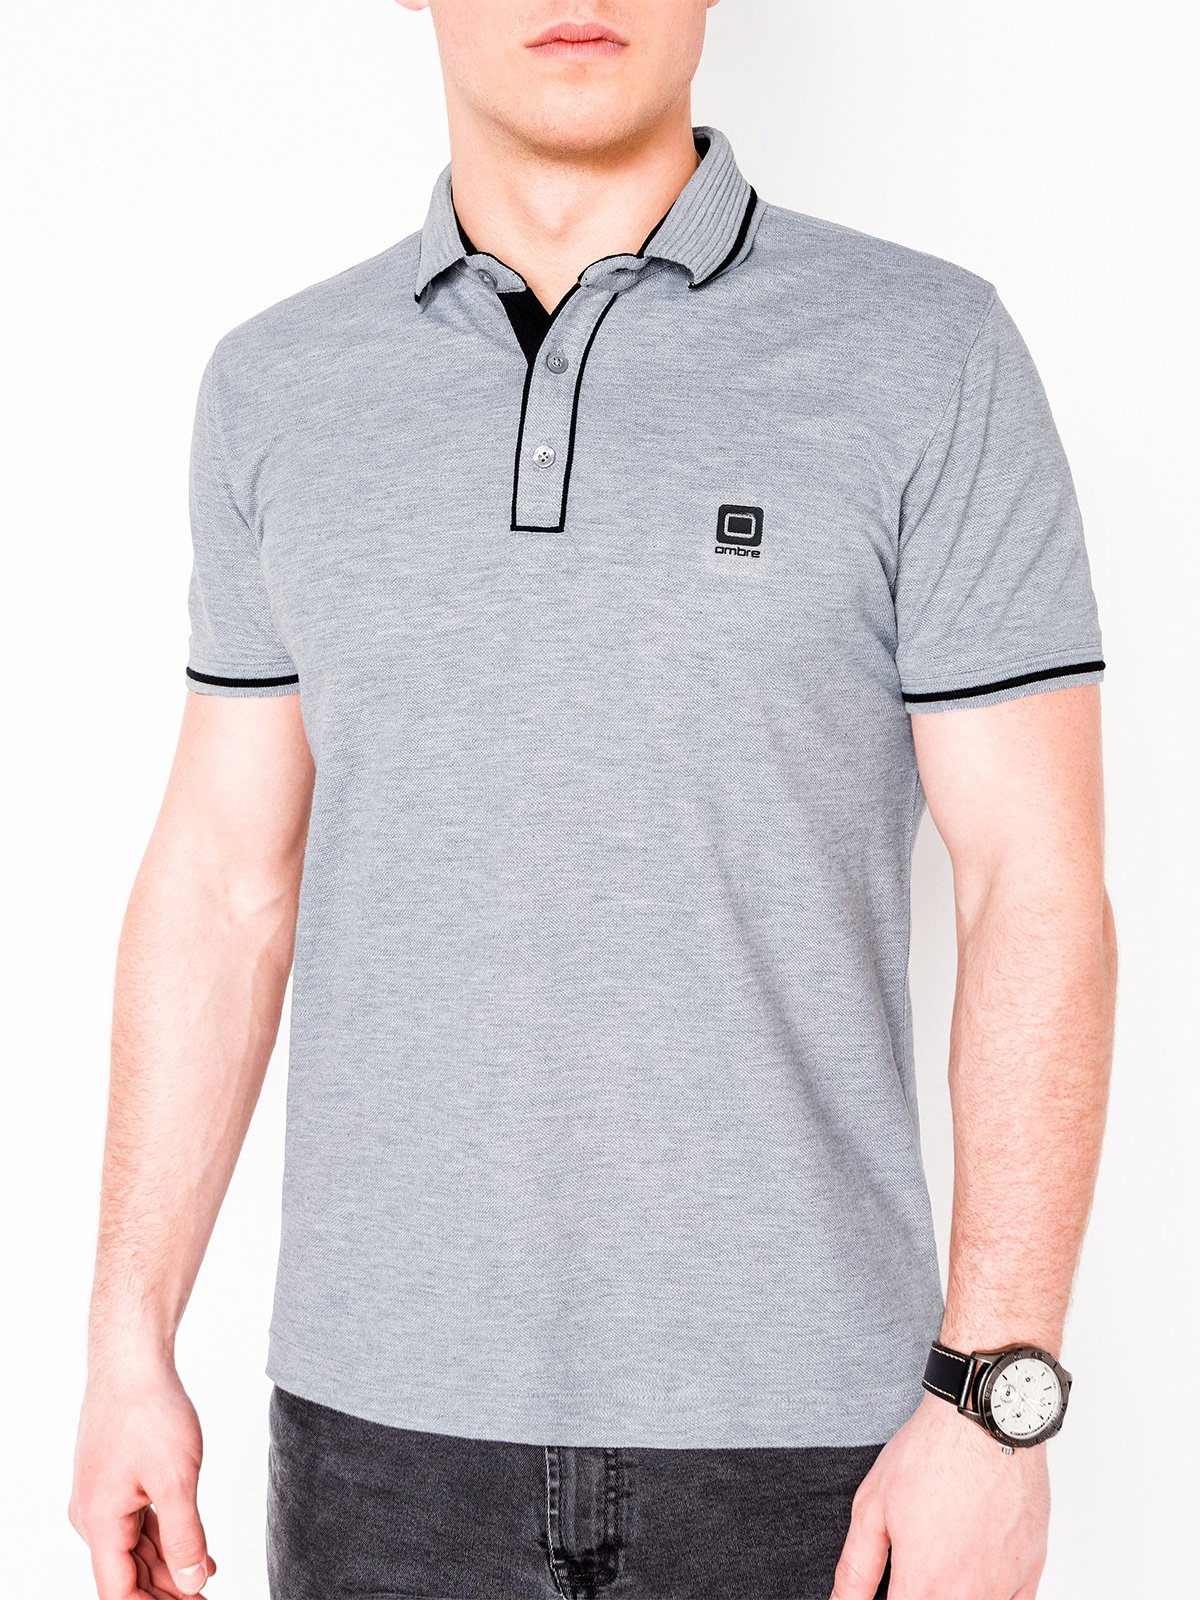 Men's plain polo shirt S920 - grey | MODONE wholesale - Clothing For Men